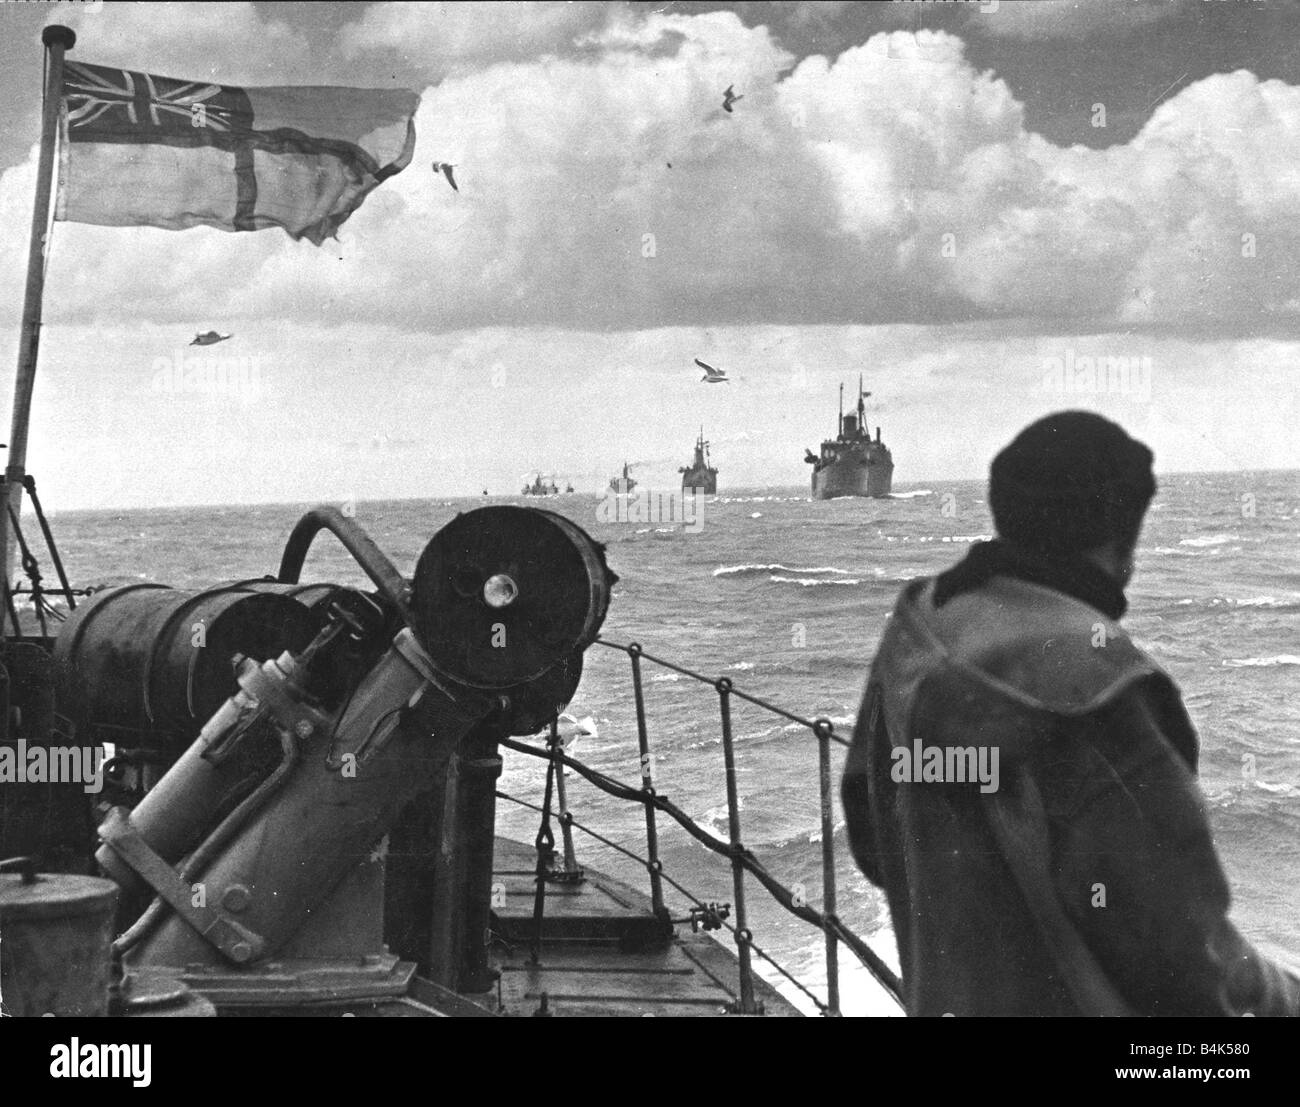 A ship convoy on its way sailing through the North Sea Sailor Second World War WW 2 WW II shipping warships English flag Sea warfare March 1943 1940s Mirrorpix 15 3 1943 Stock Photo